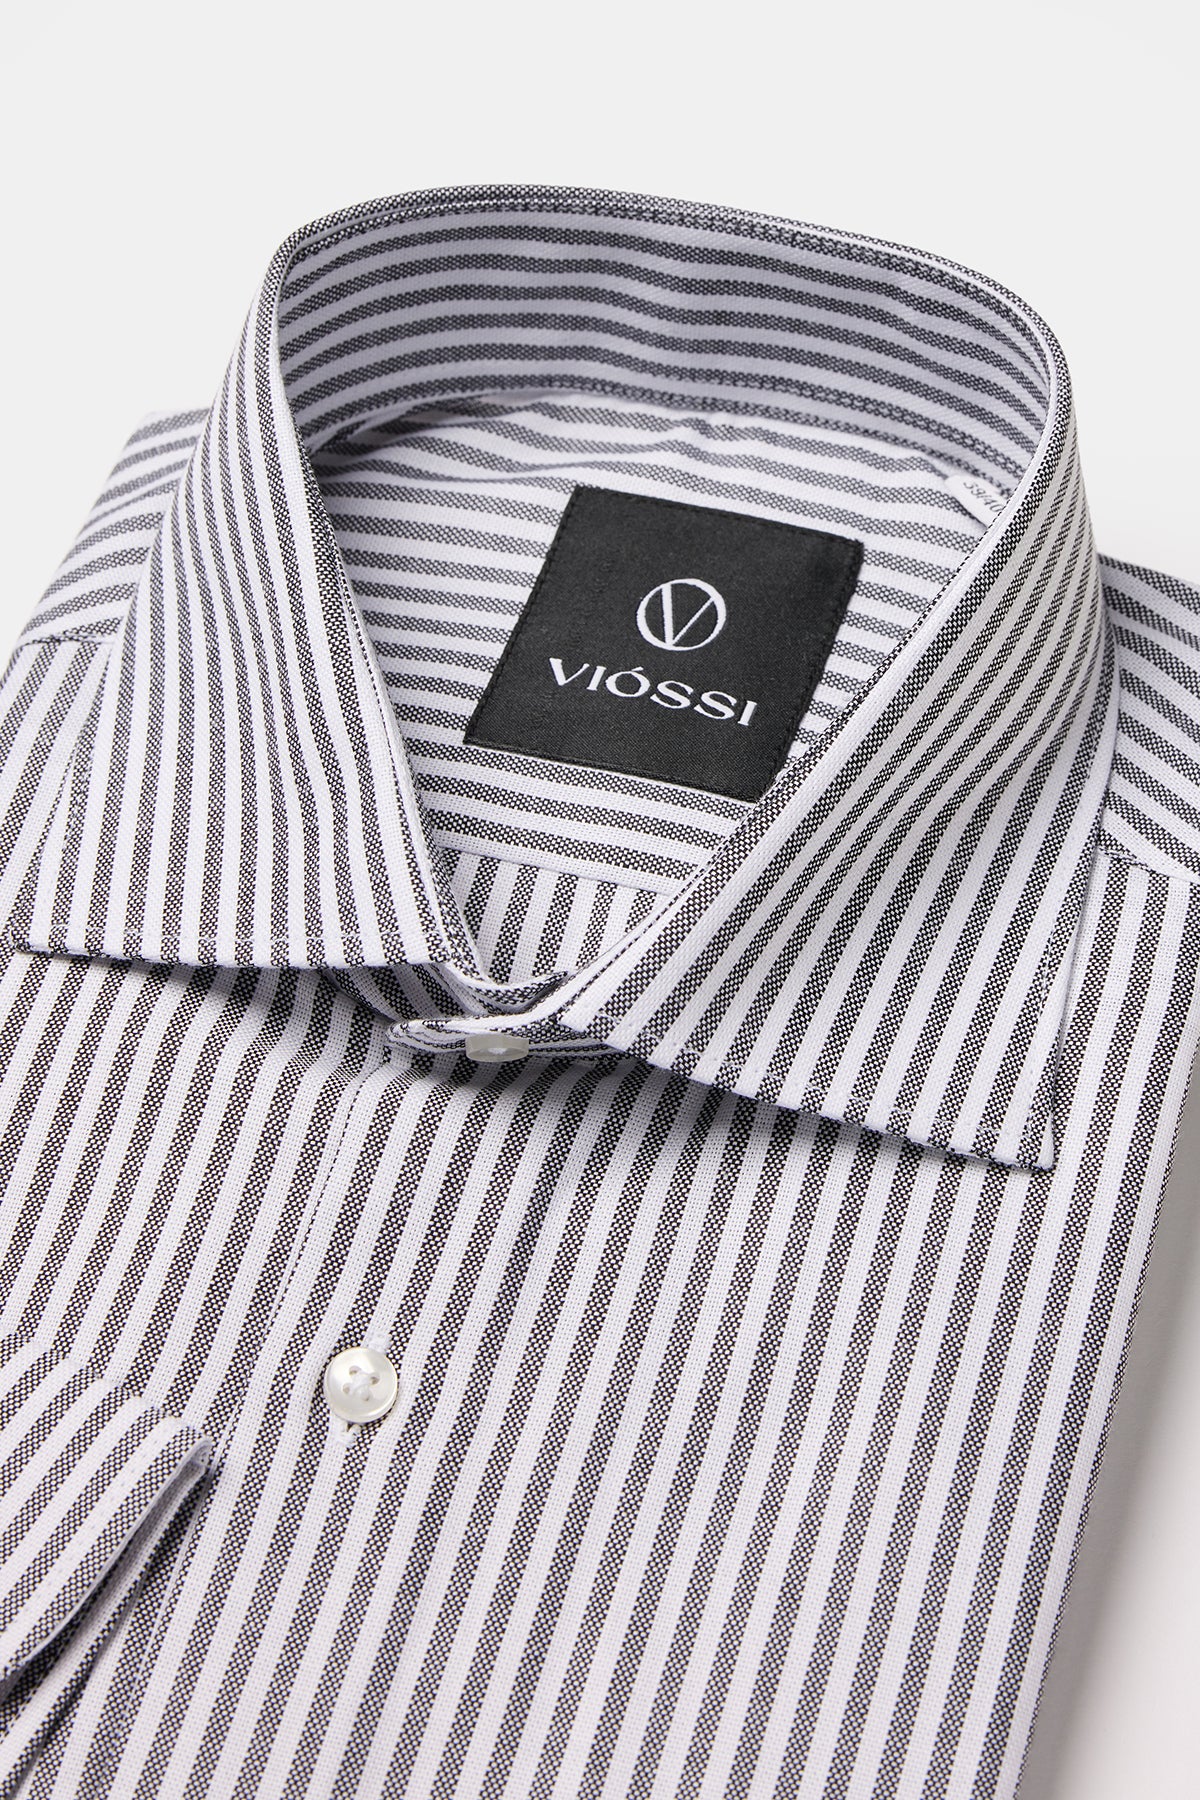 Black Striped Italian Spread Collar Shirt